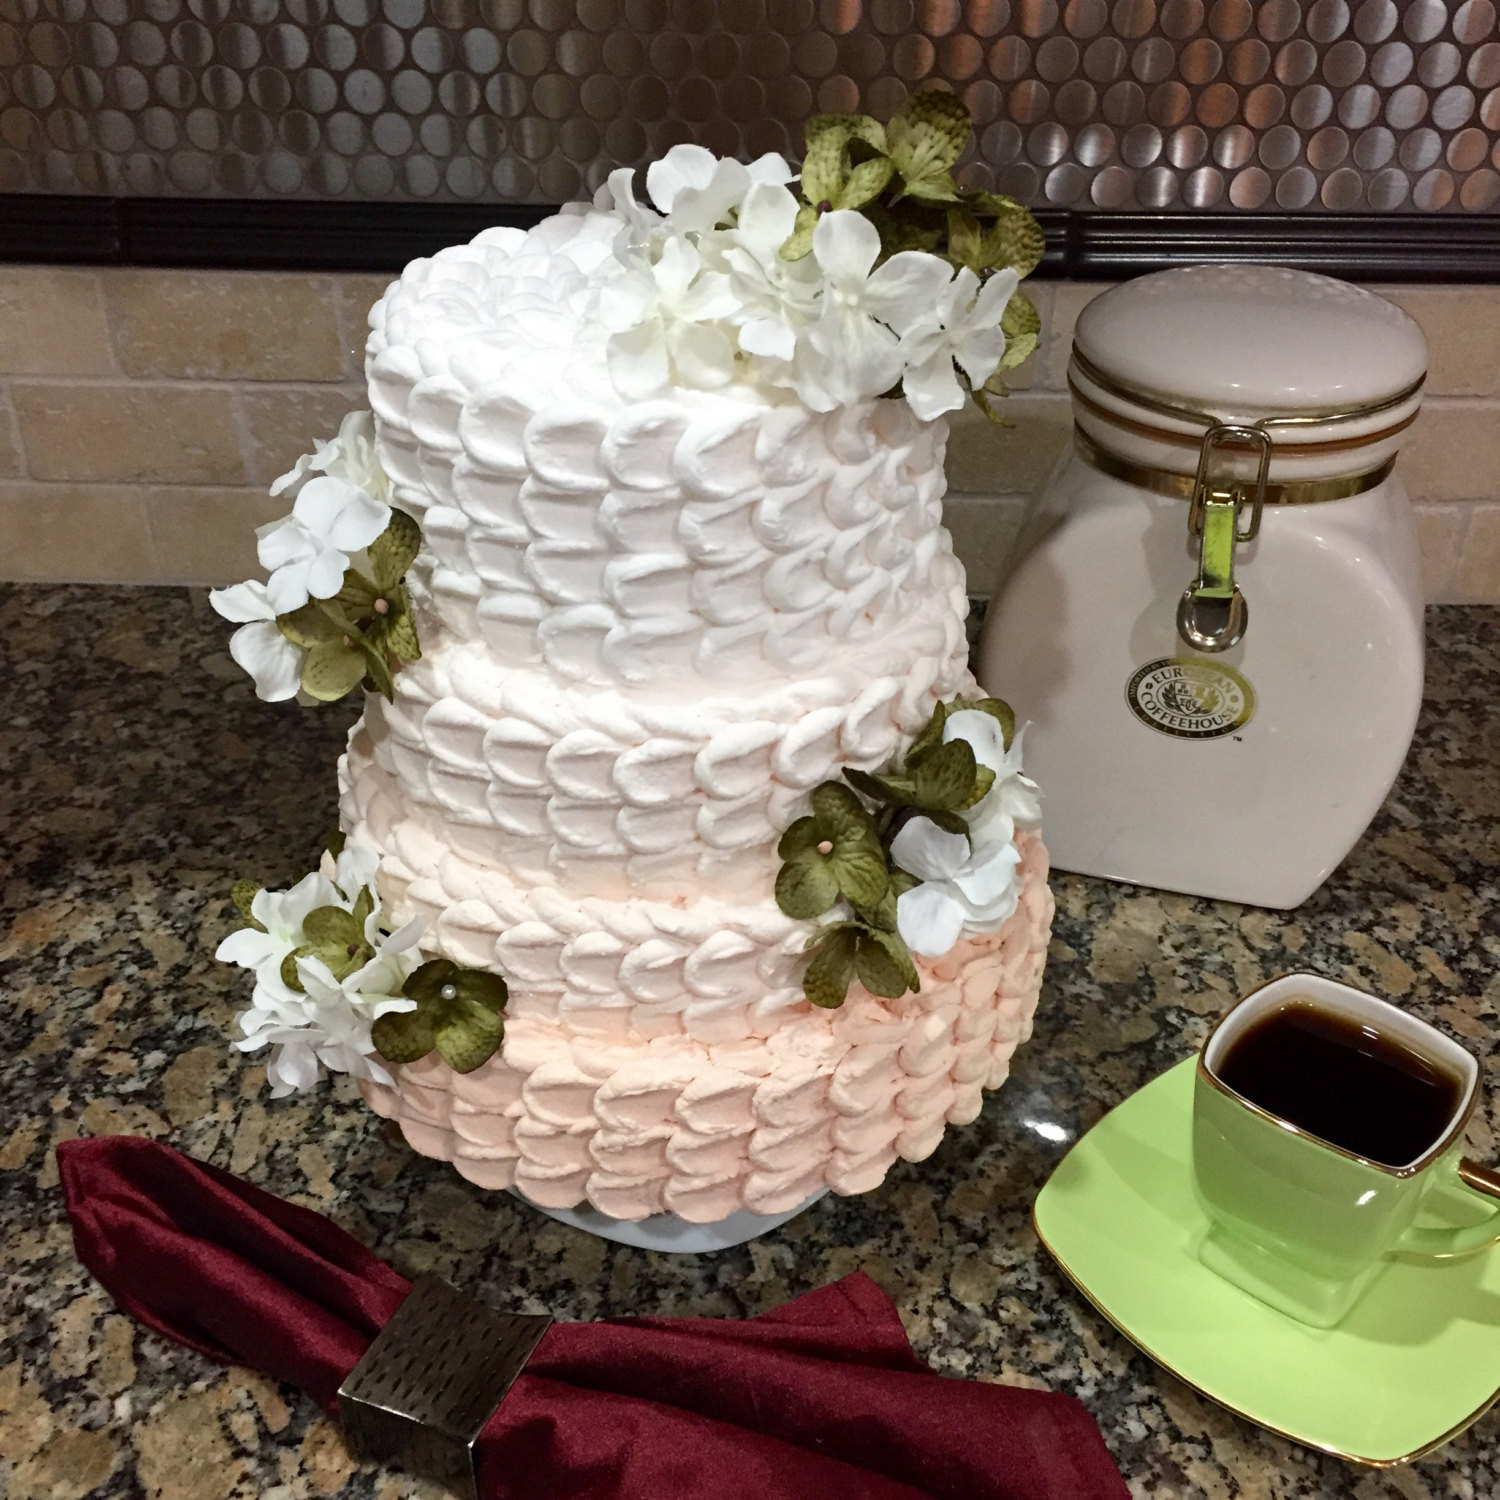 Fake Wedding Cakes For Display
 Artificial Cake Display Cake Fake Ombre Cake Wedding